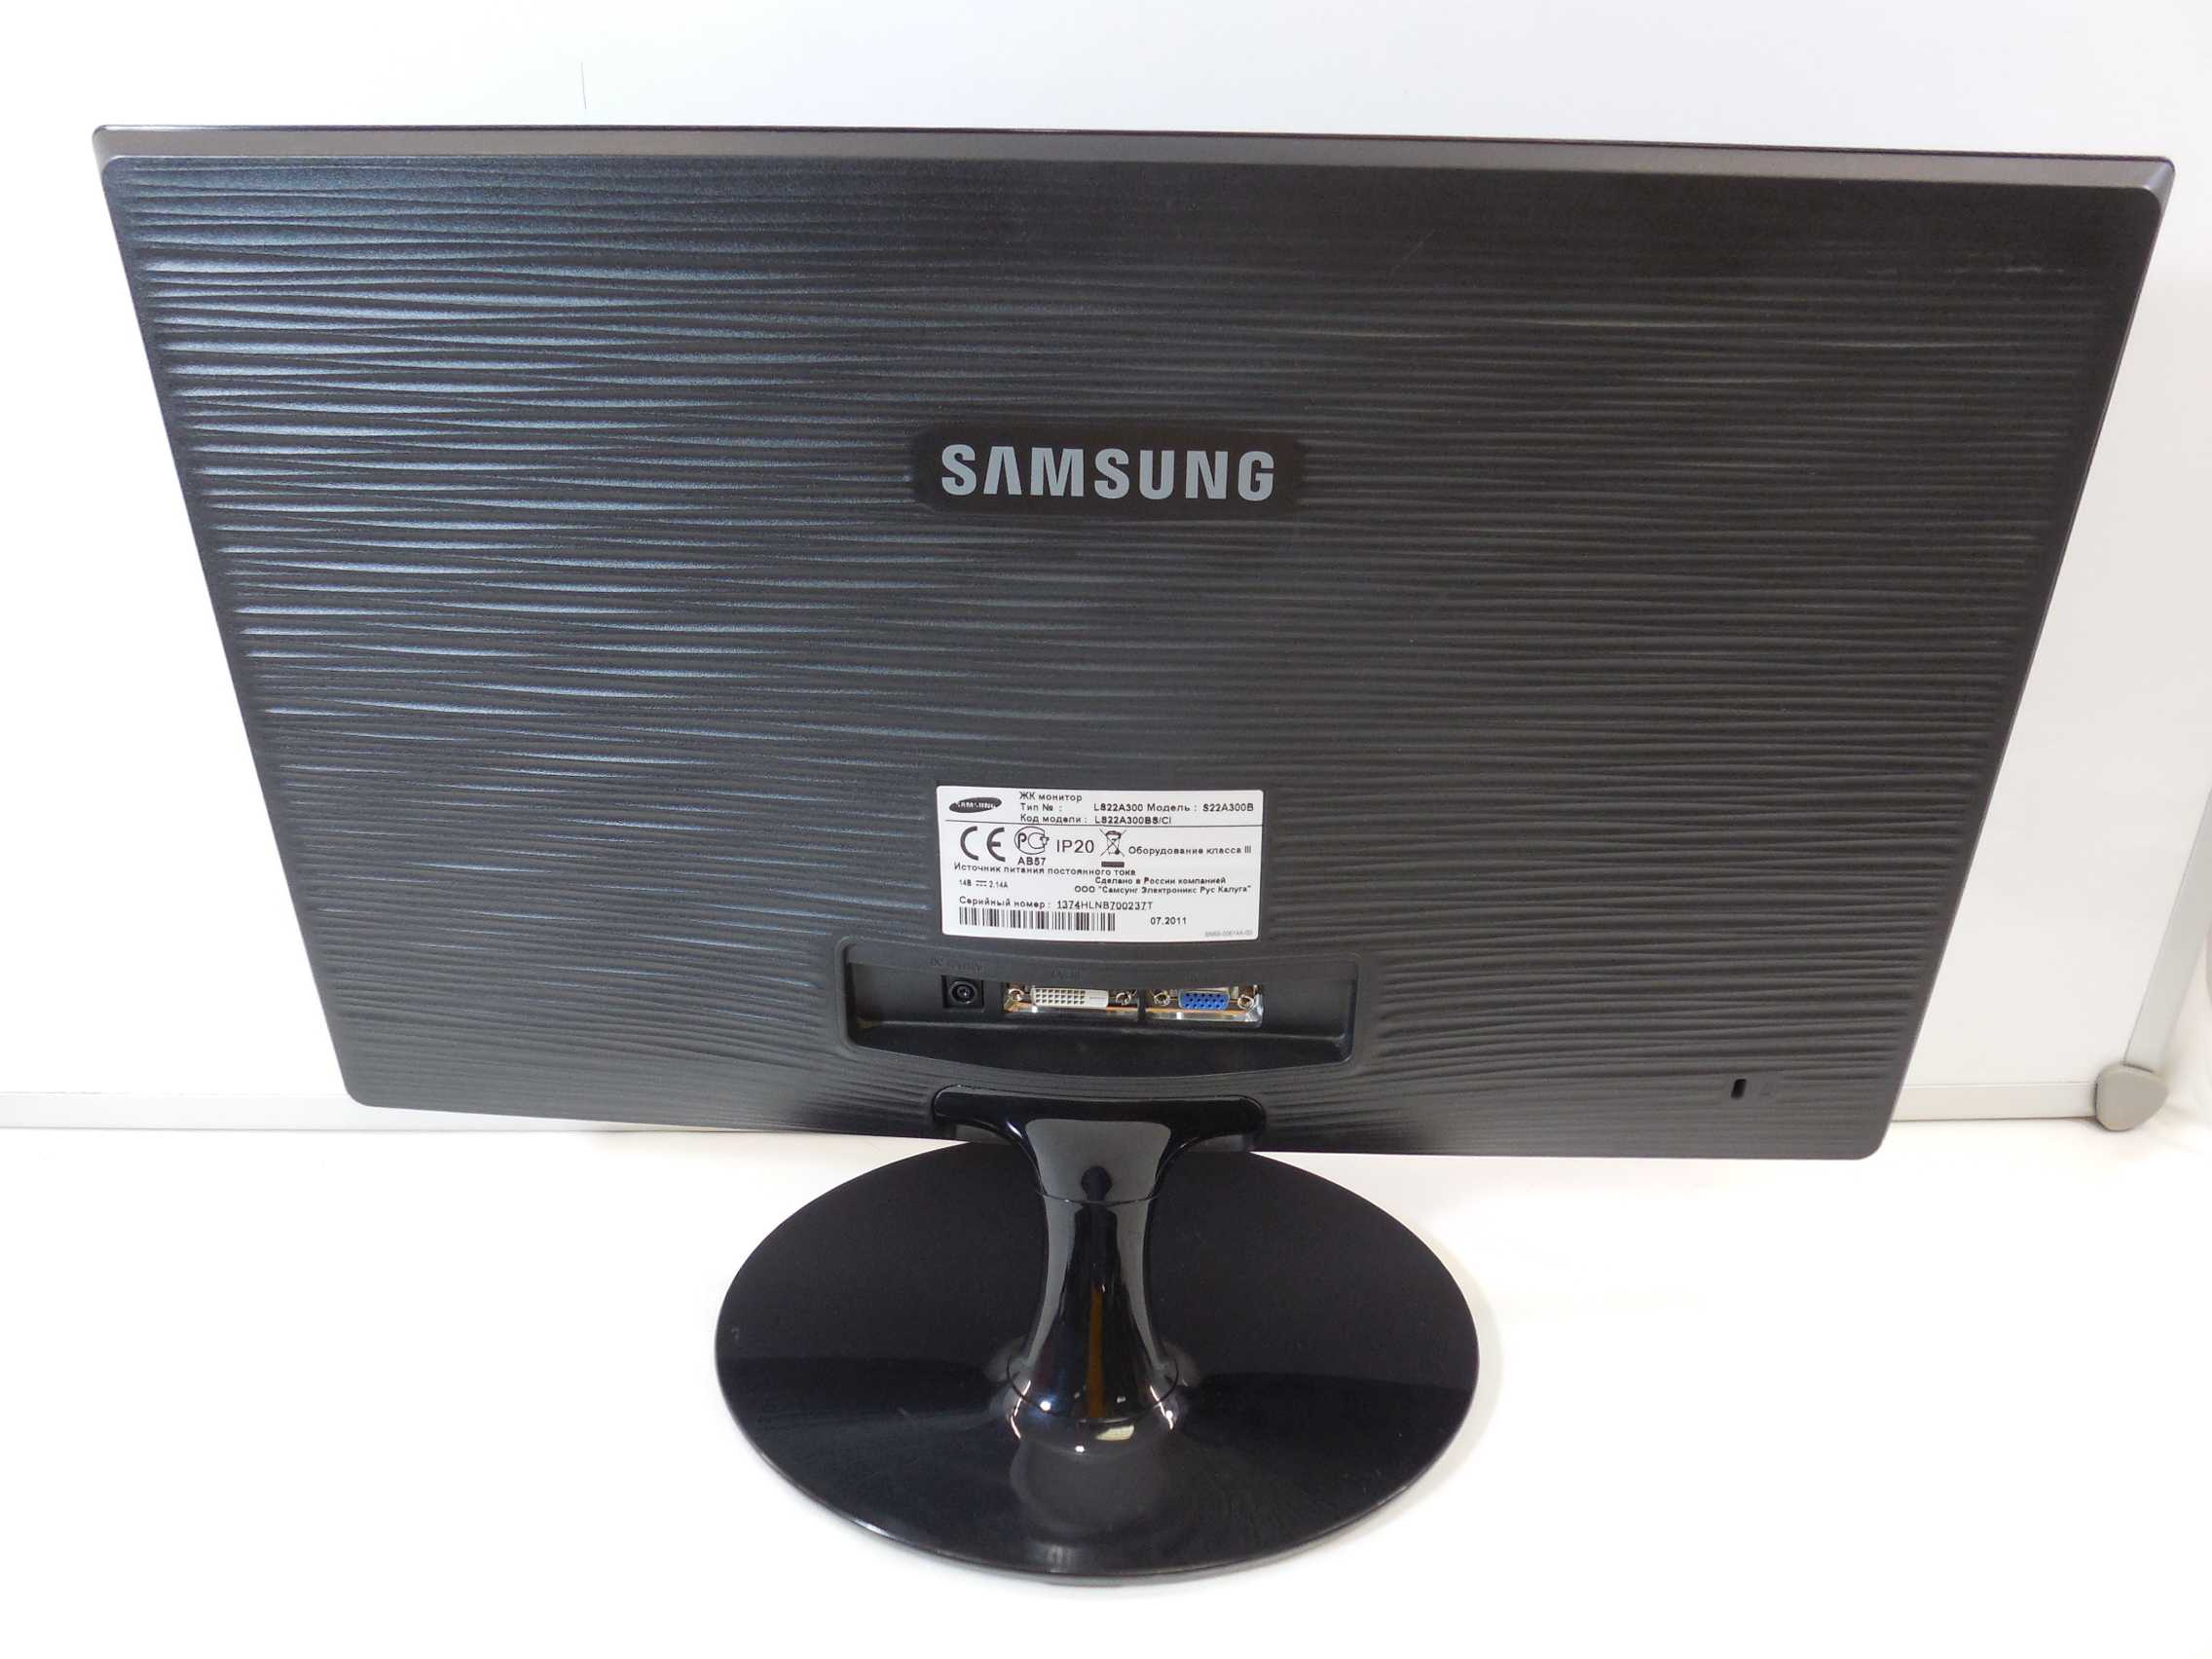 Samsung s24 256gb купить. Монитор Samsung 24a300bl. Монитор Samsung SYNCMASTER s24b300. Монитор Samsung sa300 24 дюйма. Samsung s22b300.